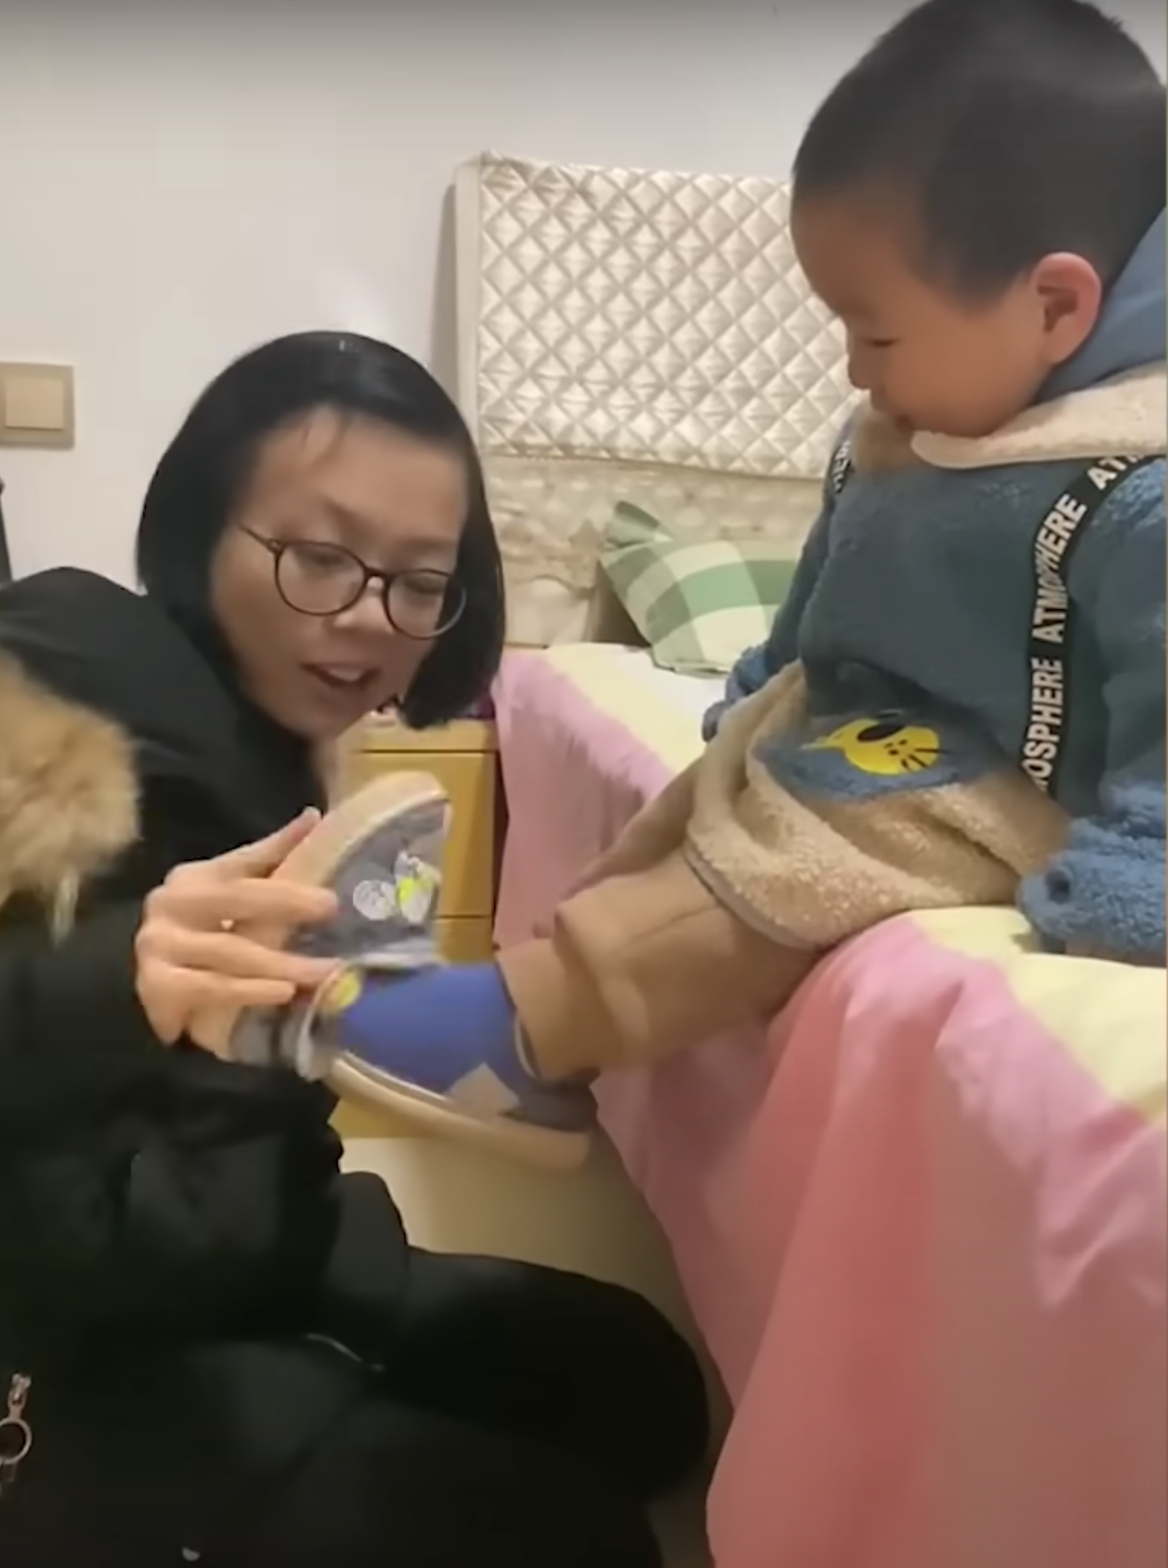 Wang hace todo lo posible por cuidar a su hijo. | Foto: Youtube.com/South China Morning Post